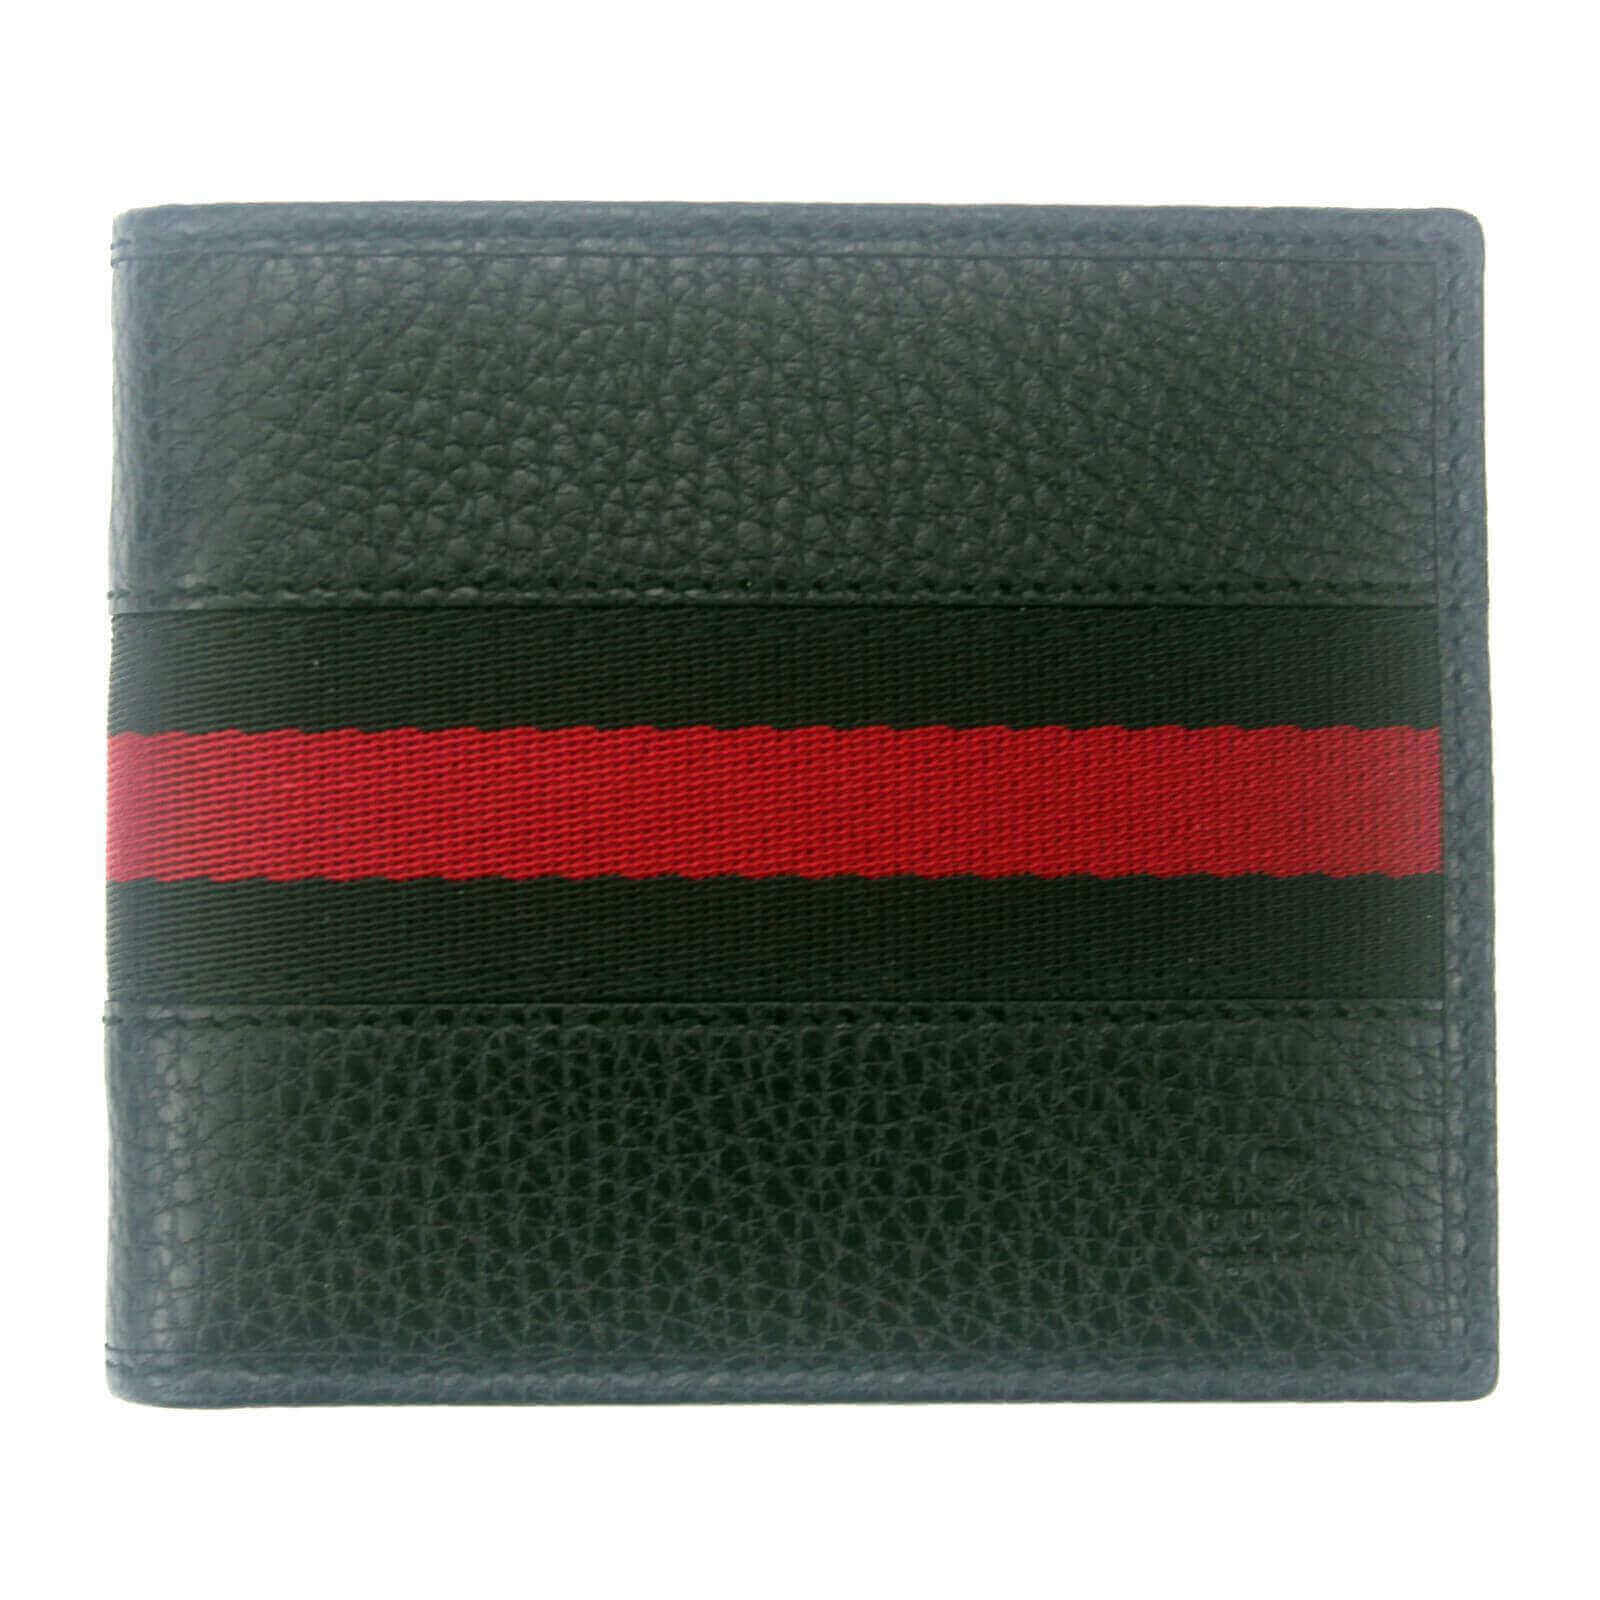 gucci stripe leather wallet